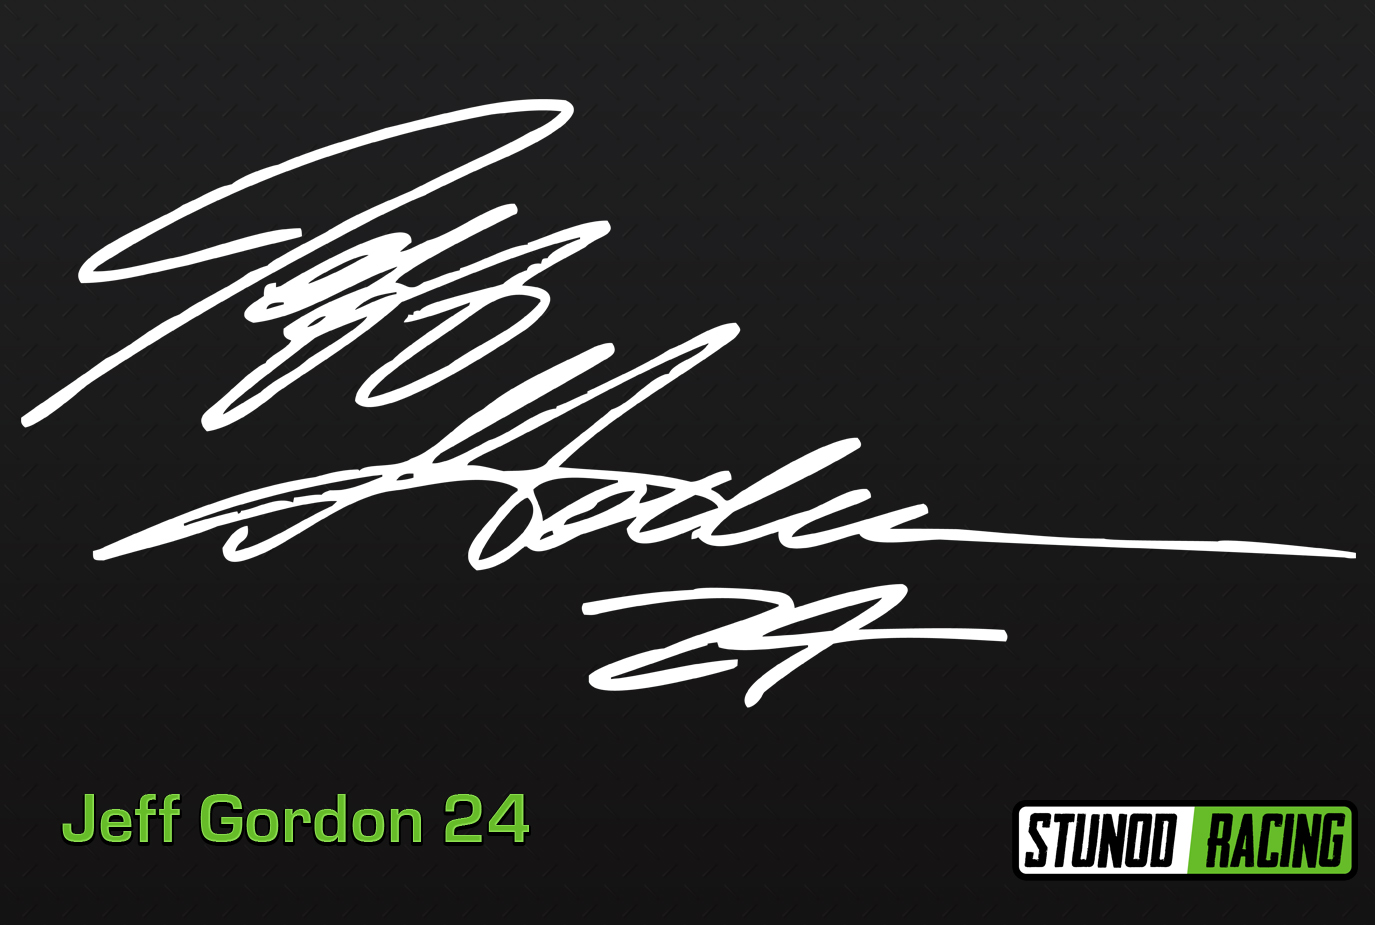 StunodRacing-Jeff_Gordon-Signature.jpg